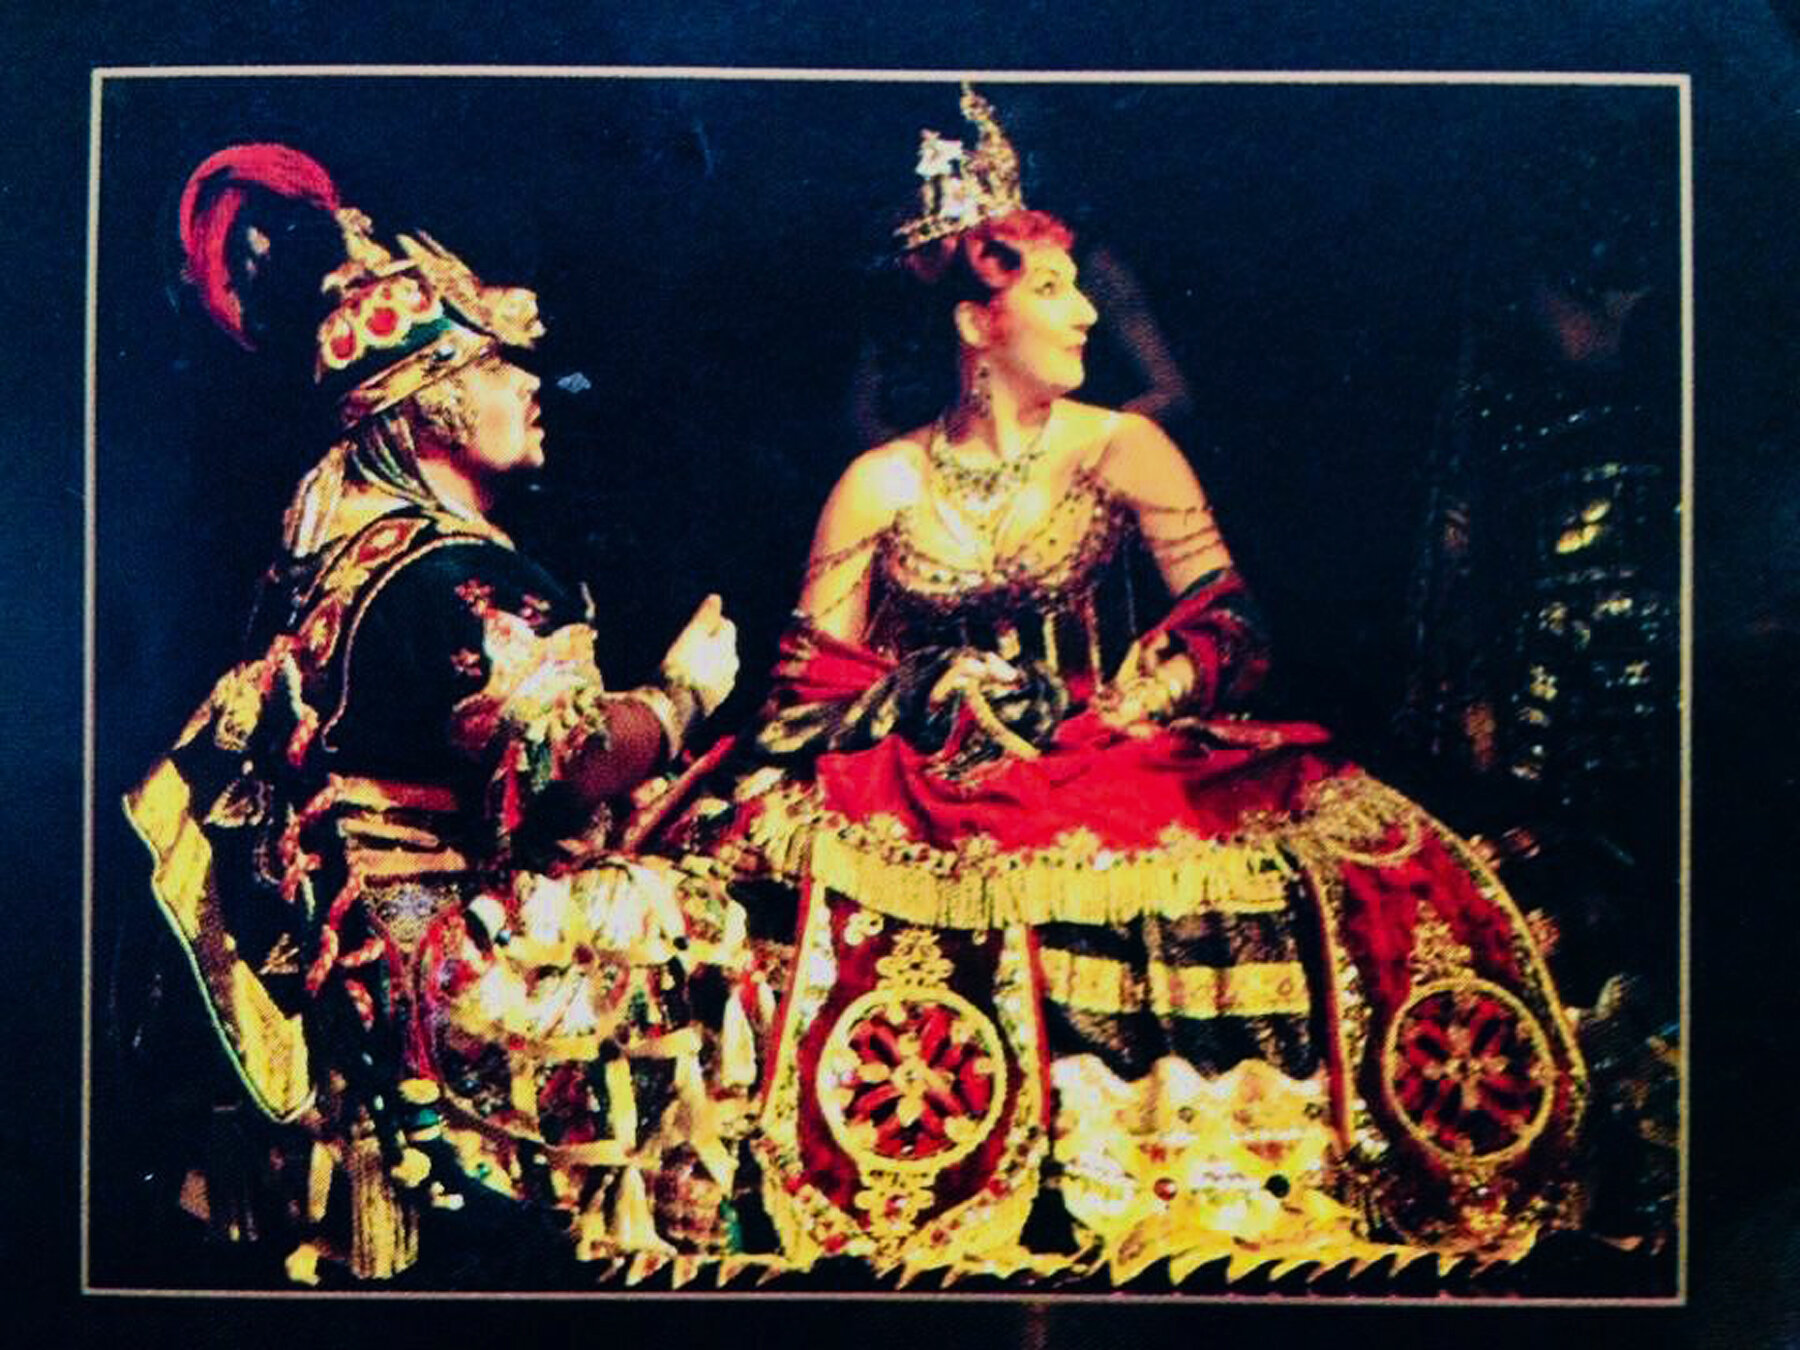  As Piangi in The Phantom of the Opera, with soprano Shân Cothi. 